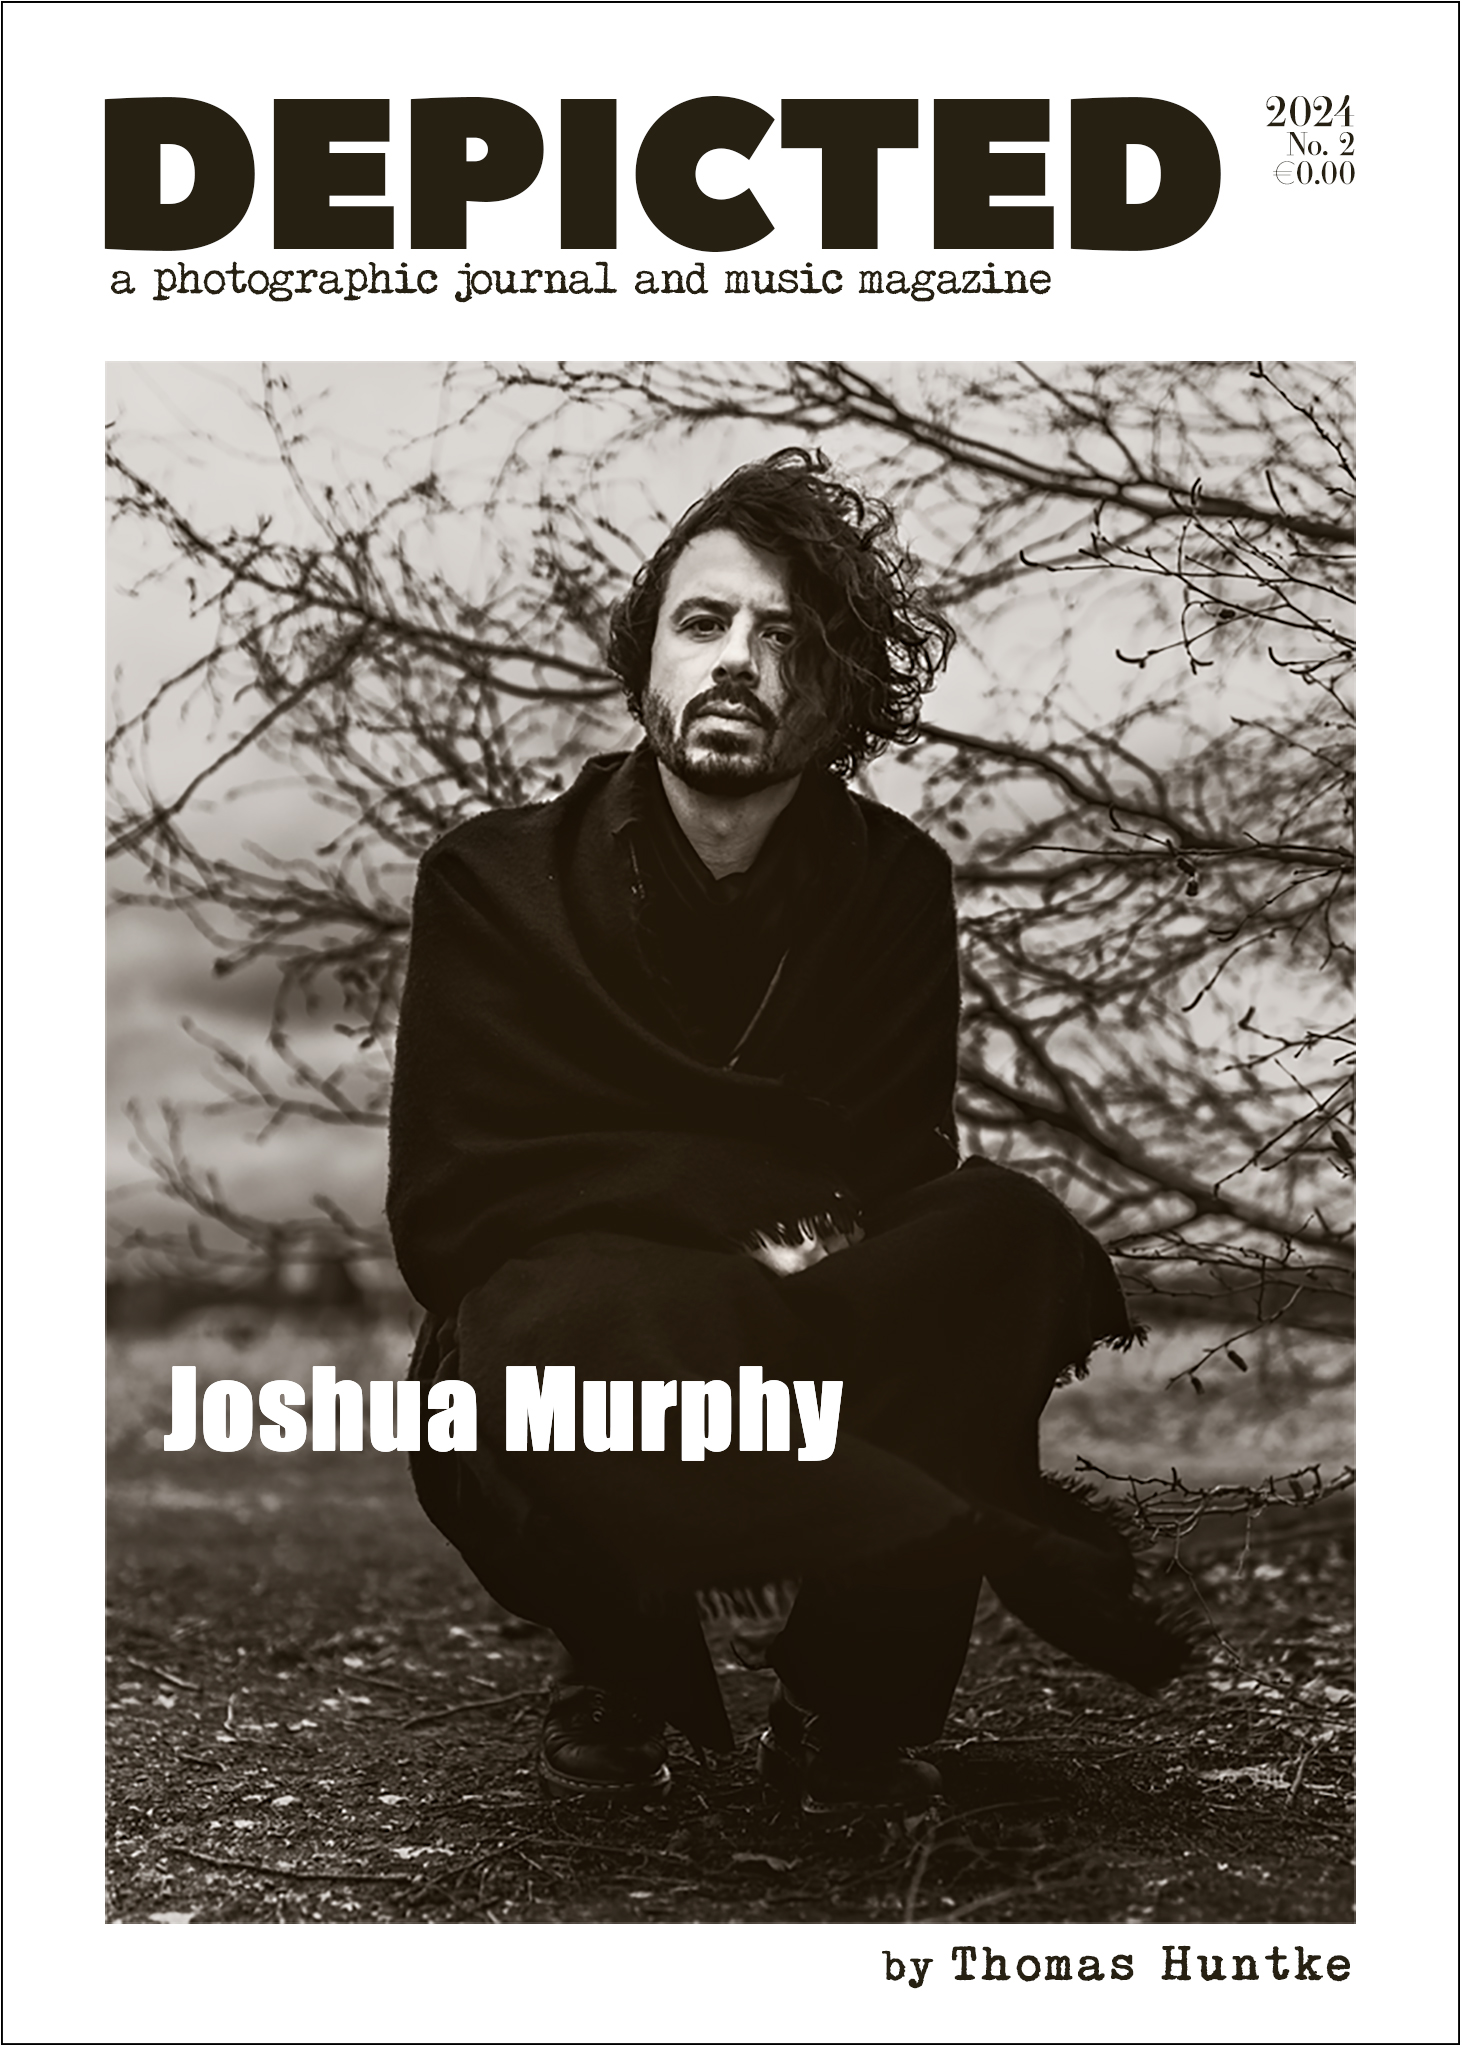 Joshua Murphy